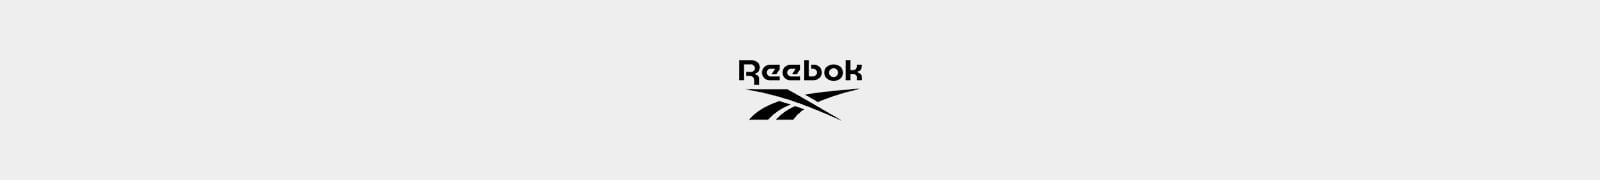 Reebok Category Slider Banner